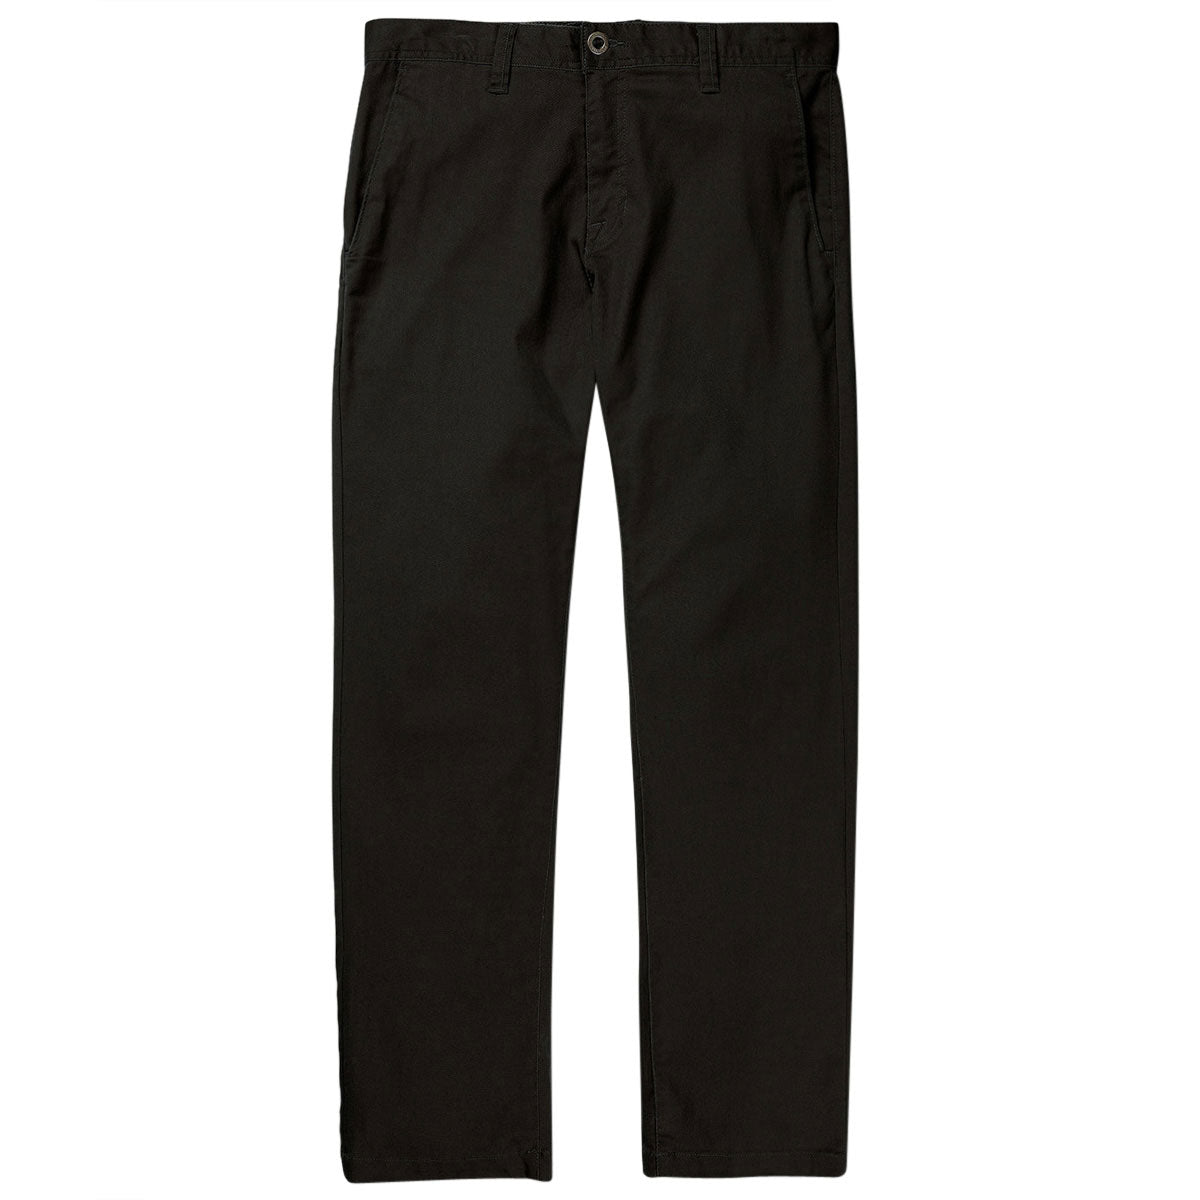 Volcom Frickin Modern Stretch Pants - Black/Black image 1